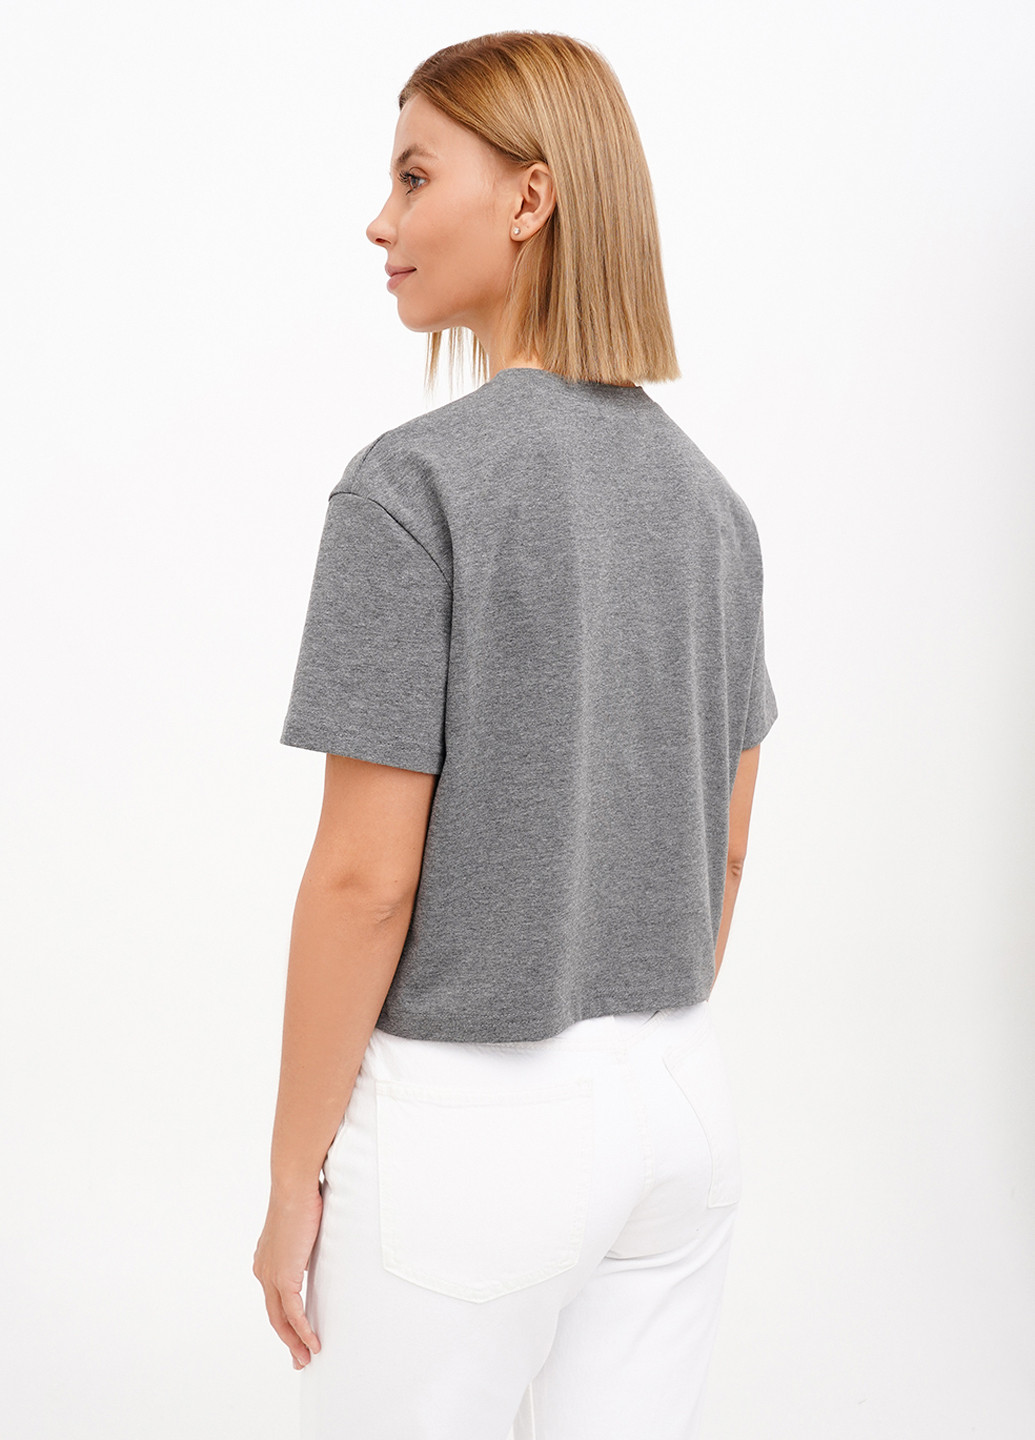 Сіра літня укорочена жіноча футболка KASTA design